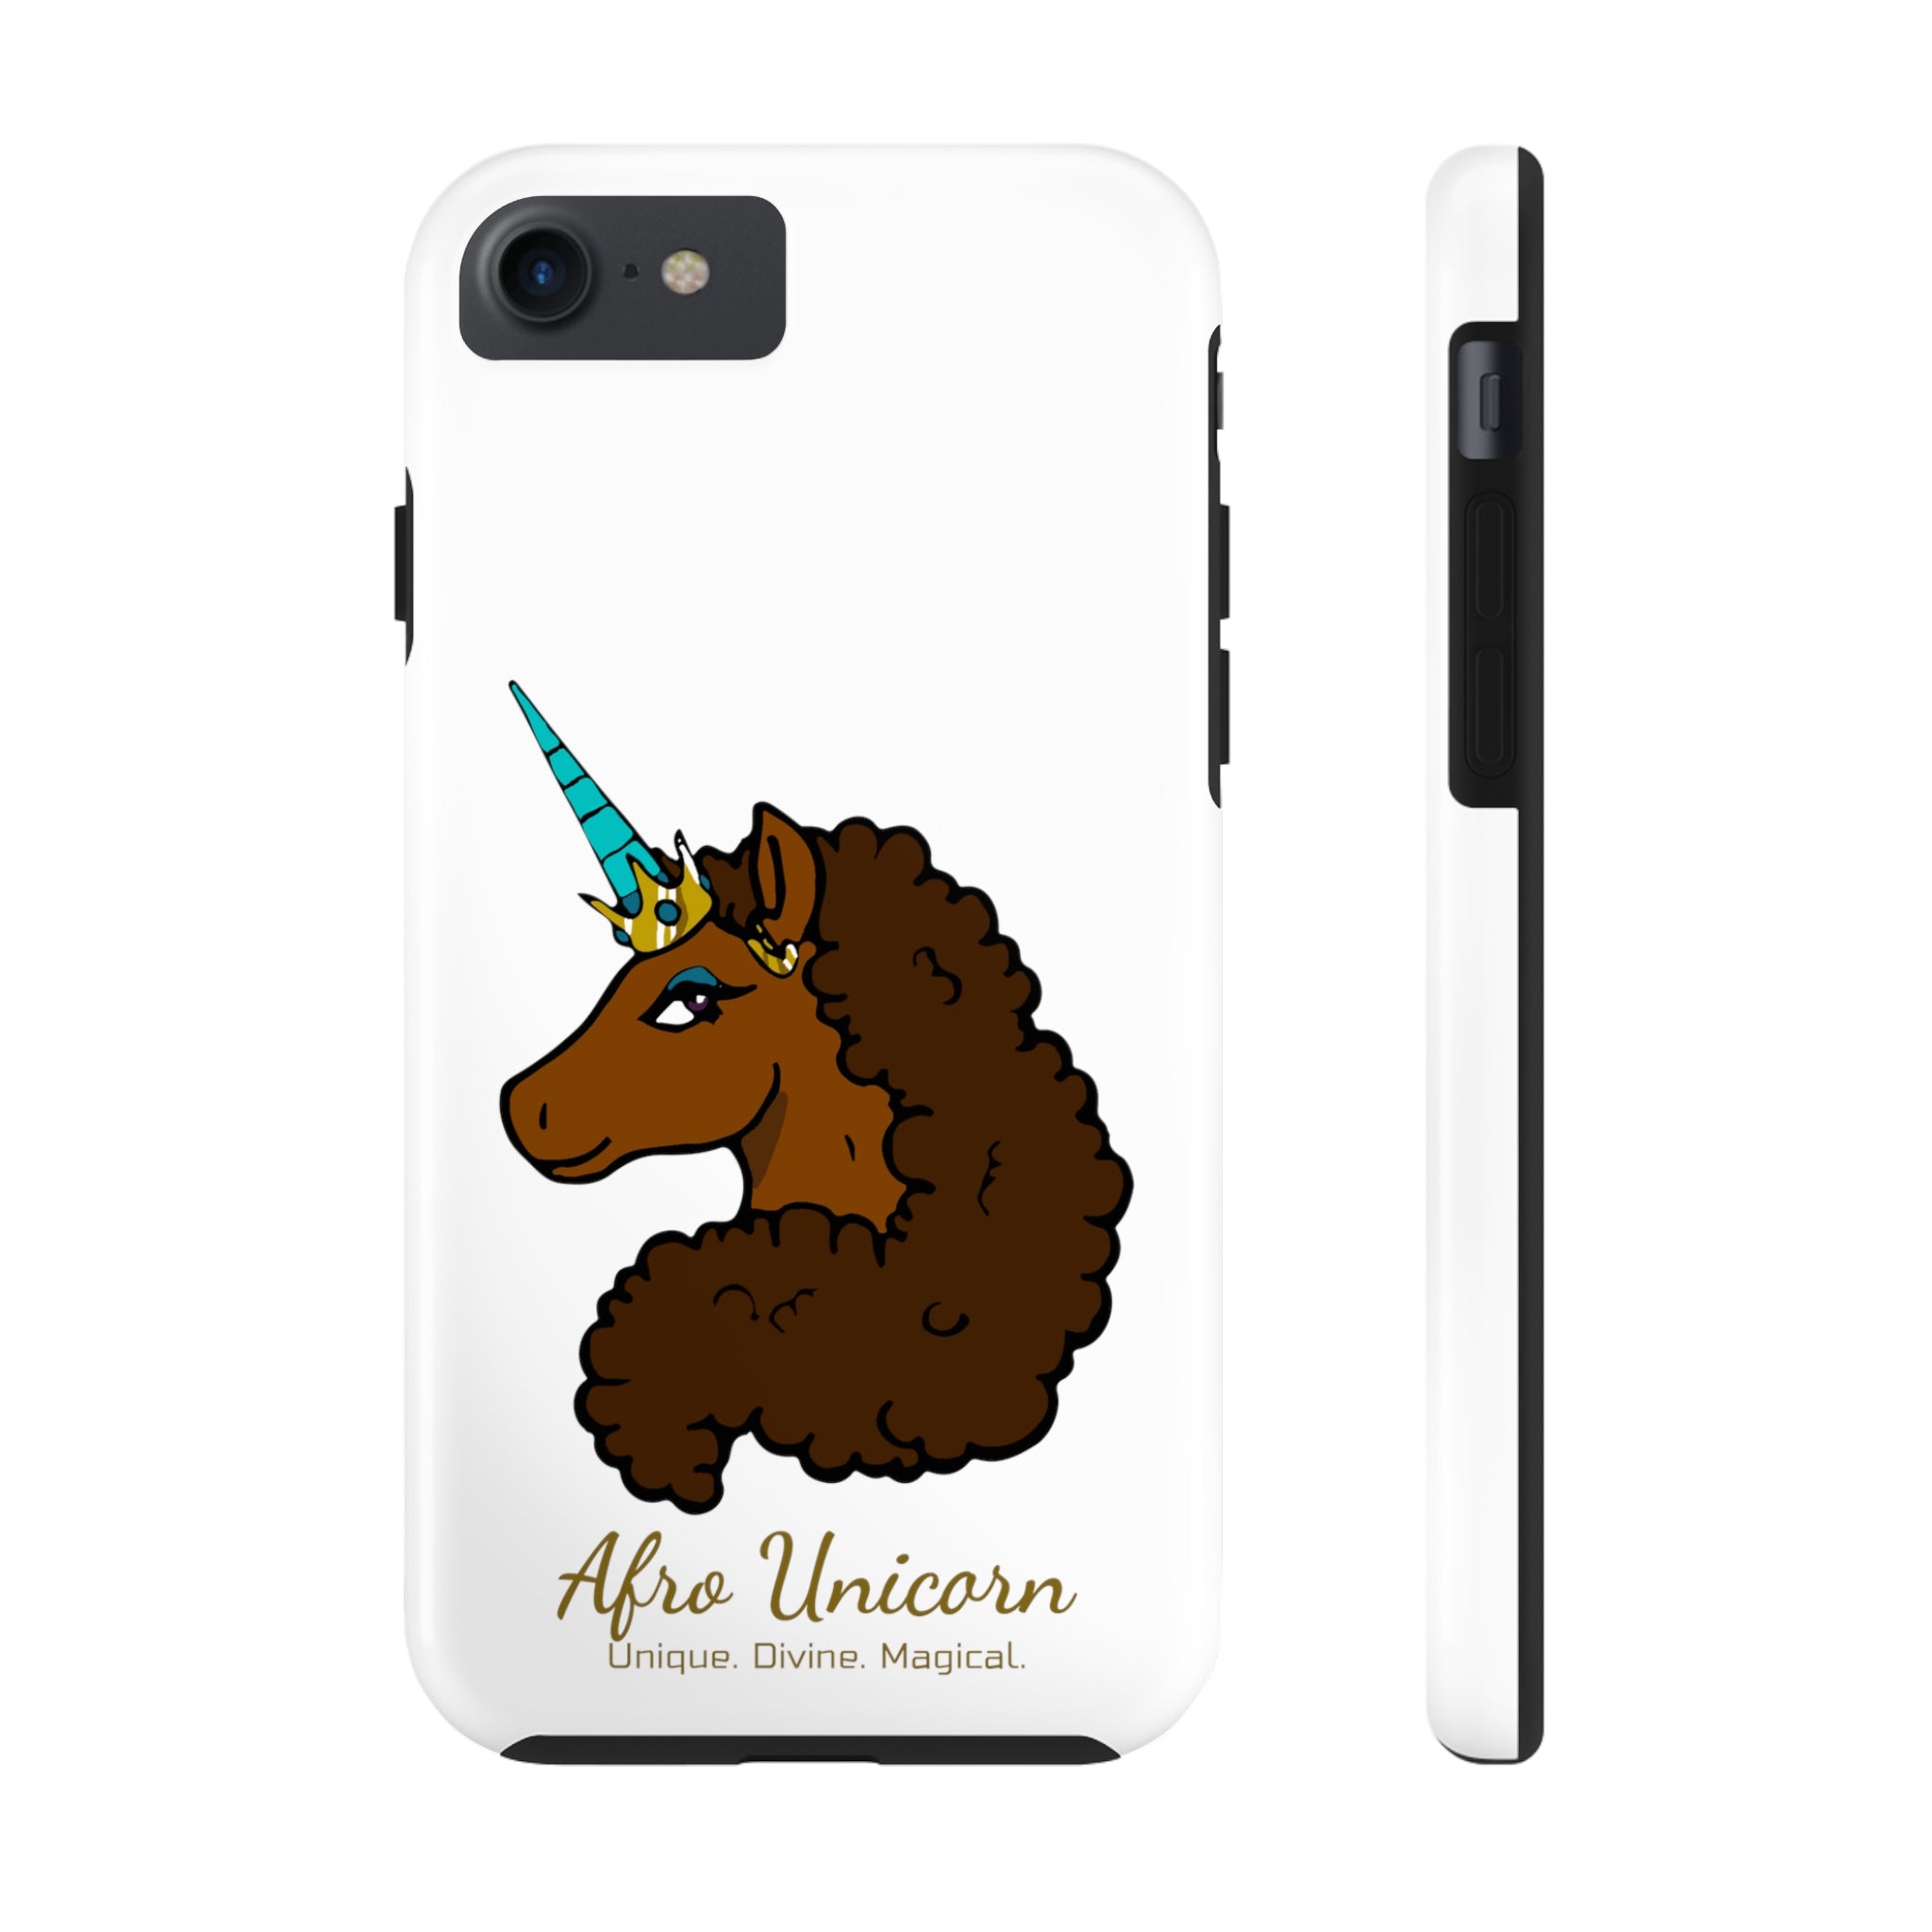 Afro Unicorn Tough Phone Cases - Caramel